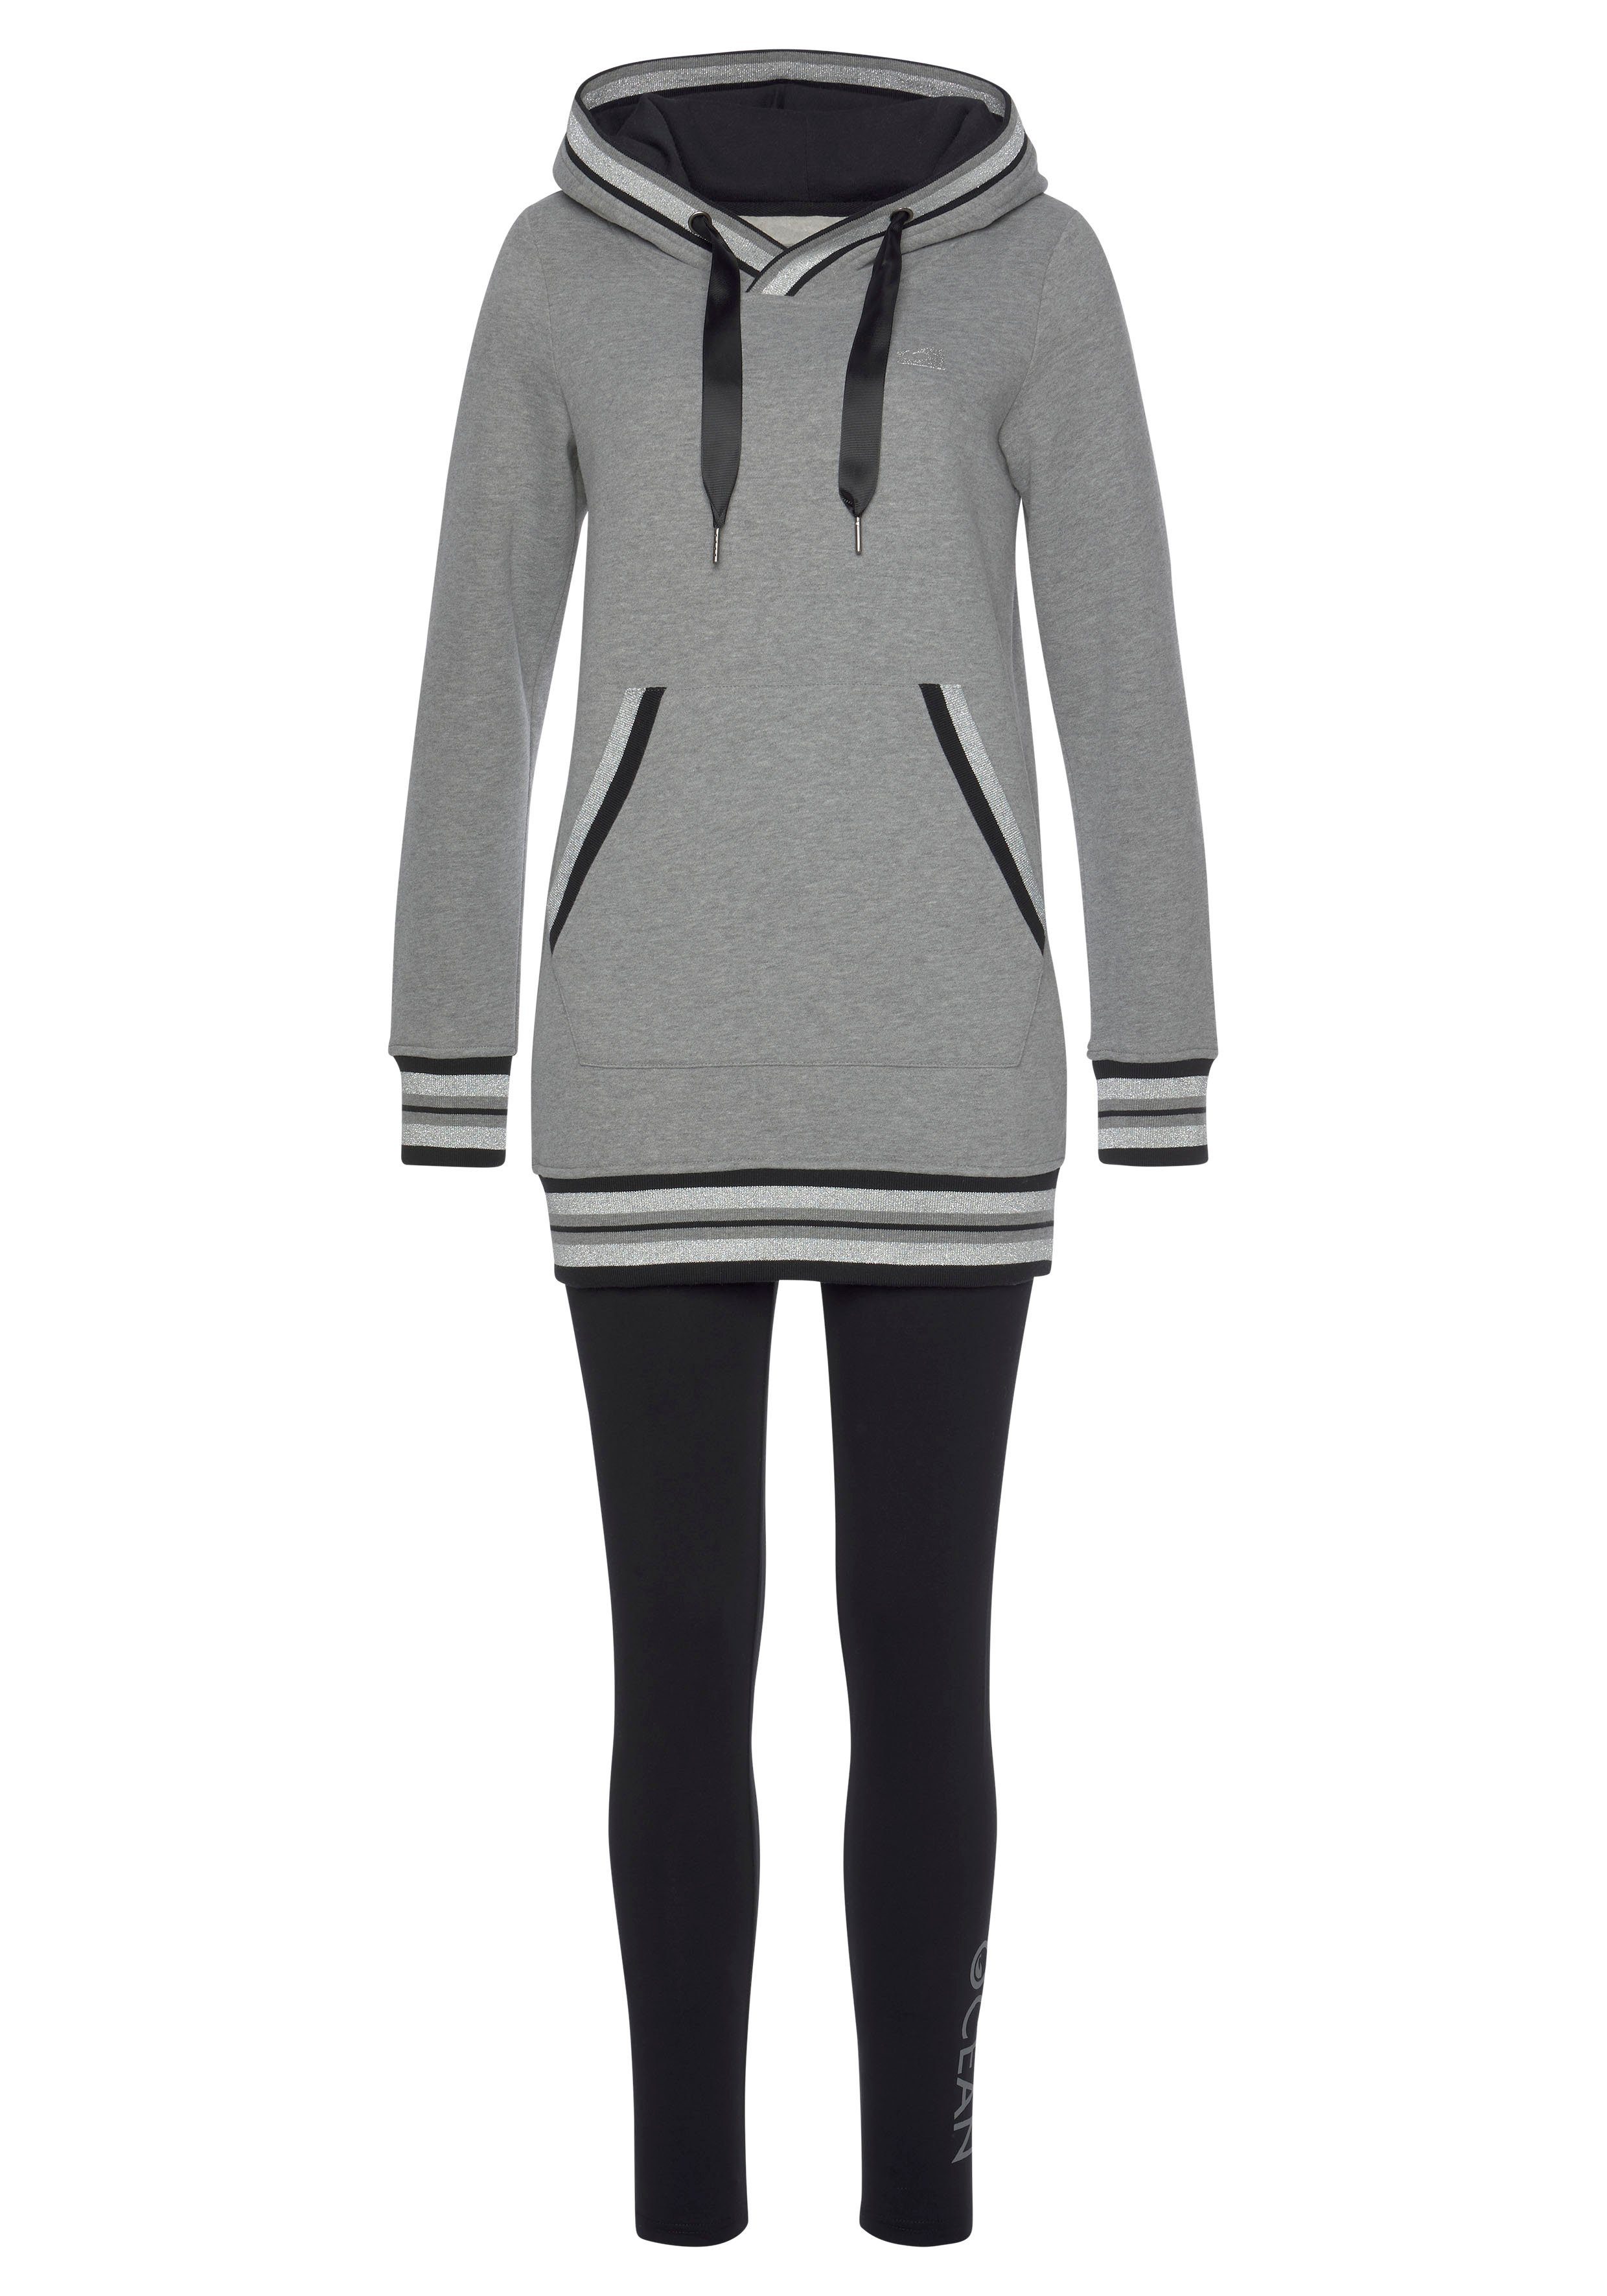 Ocean Sportswear Jogginganzug Athleisure Joggingsuit mit Leggings) grey melange/black (2-tlg